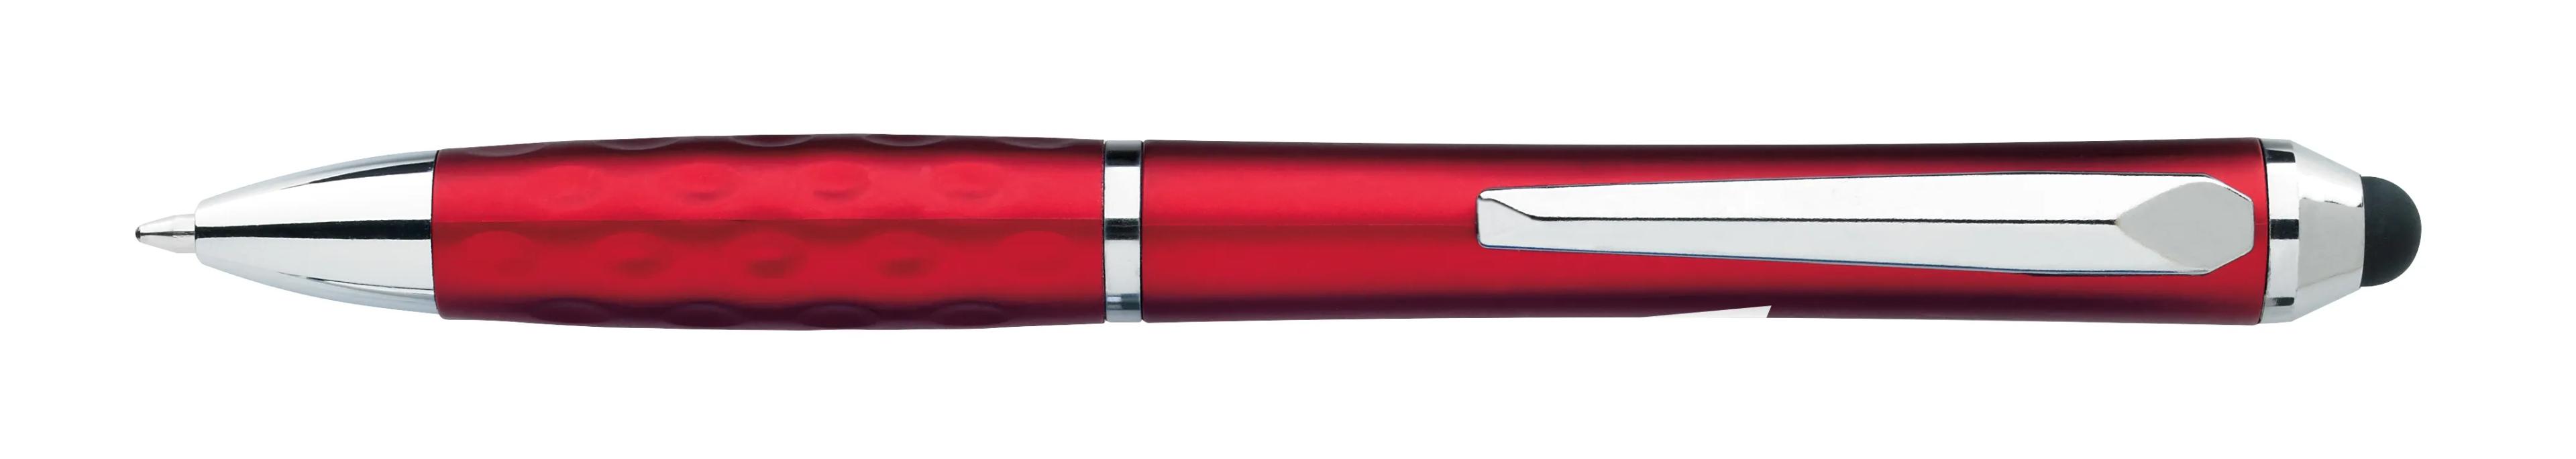 Tev Metallic Stylus Pen 40 of 77